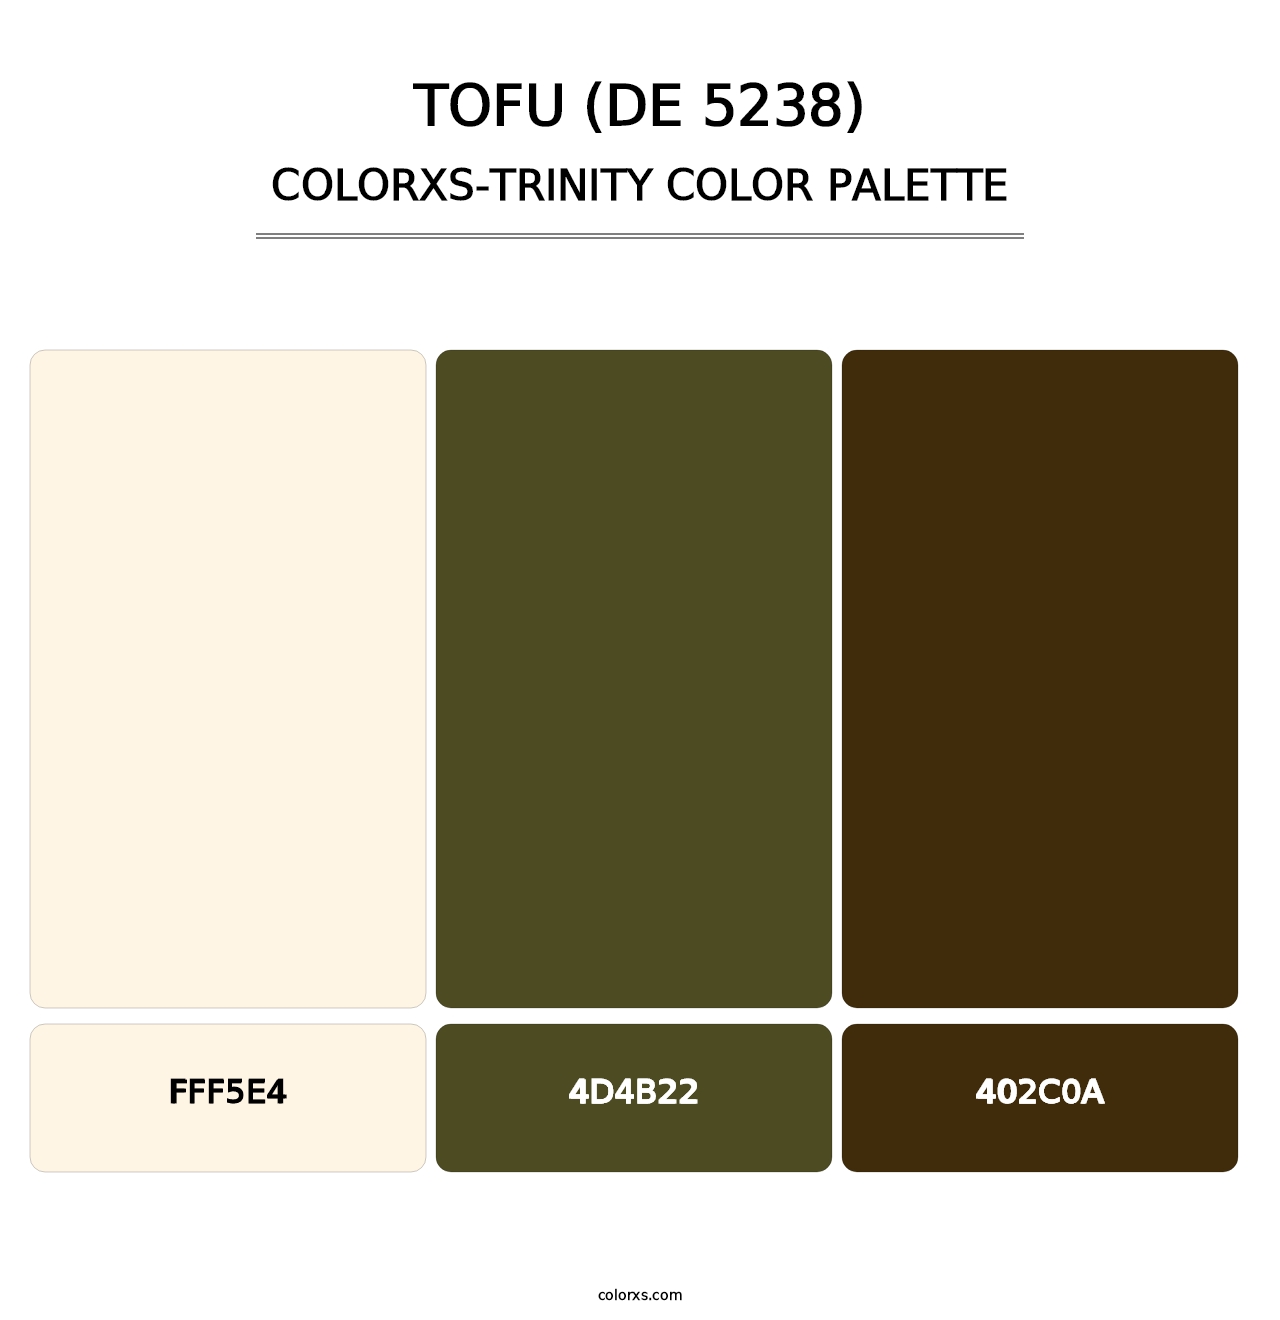 Tofu (DE 5238) - Colorxs Trinity Palette